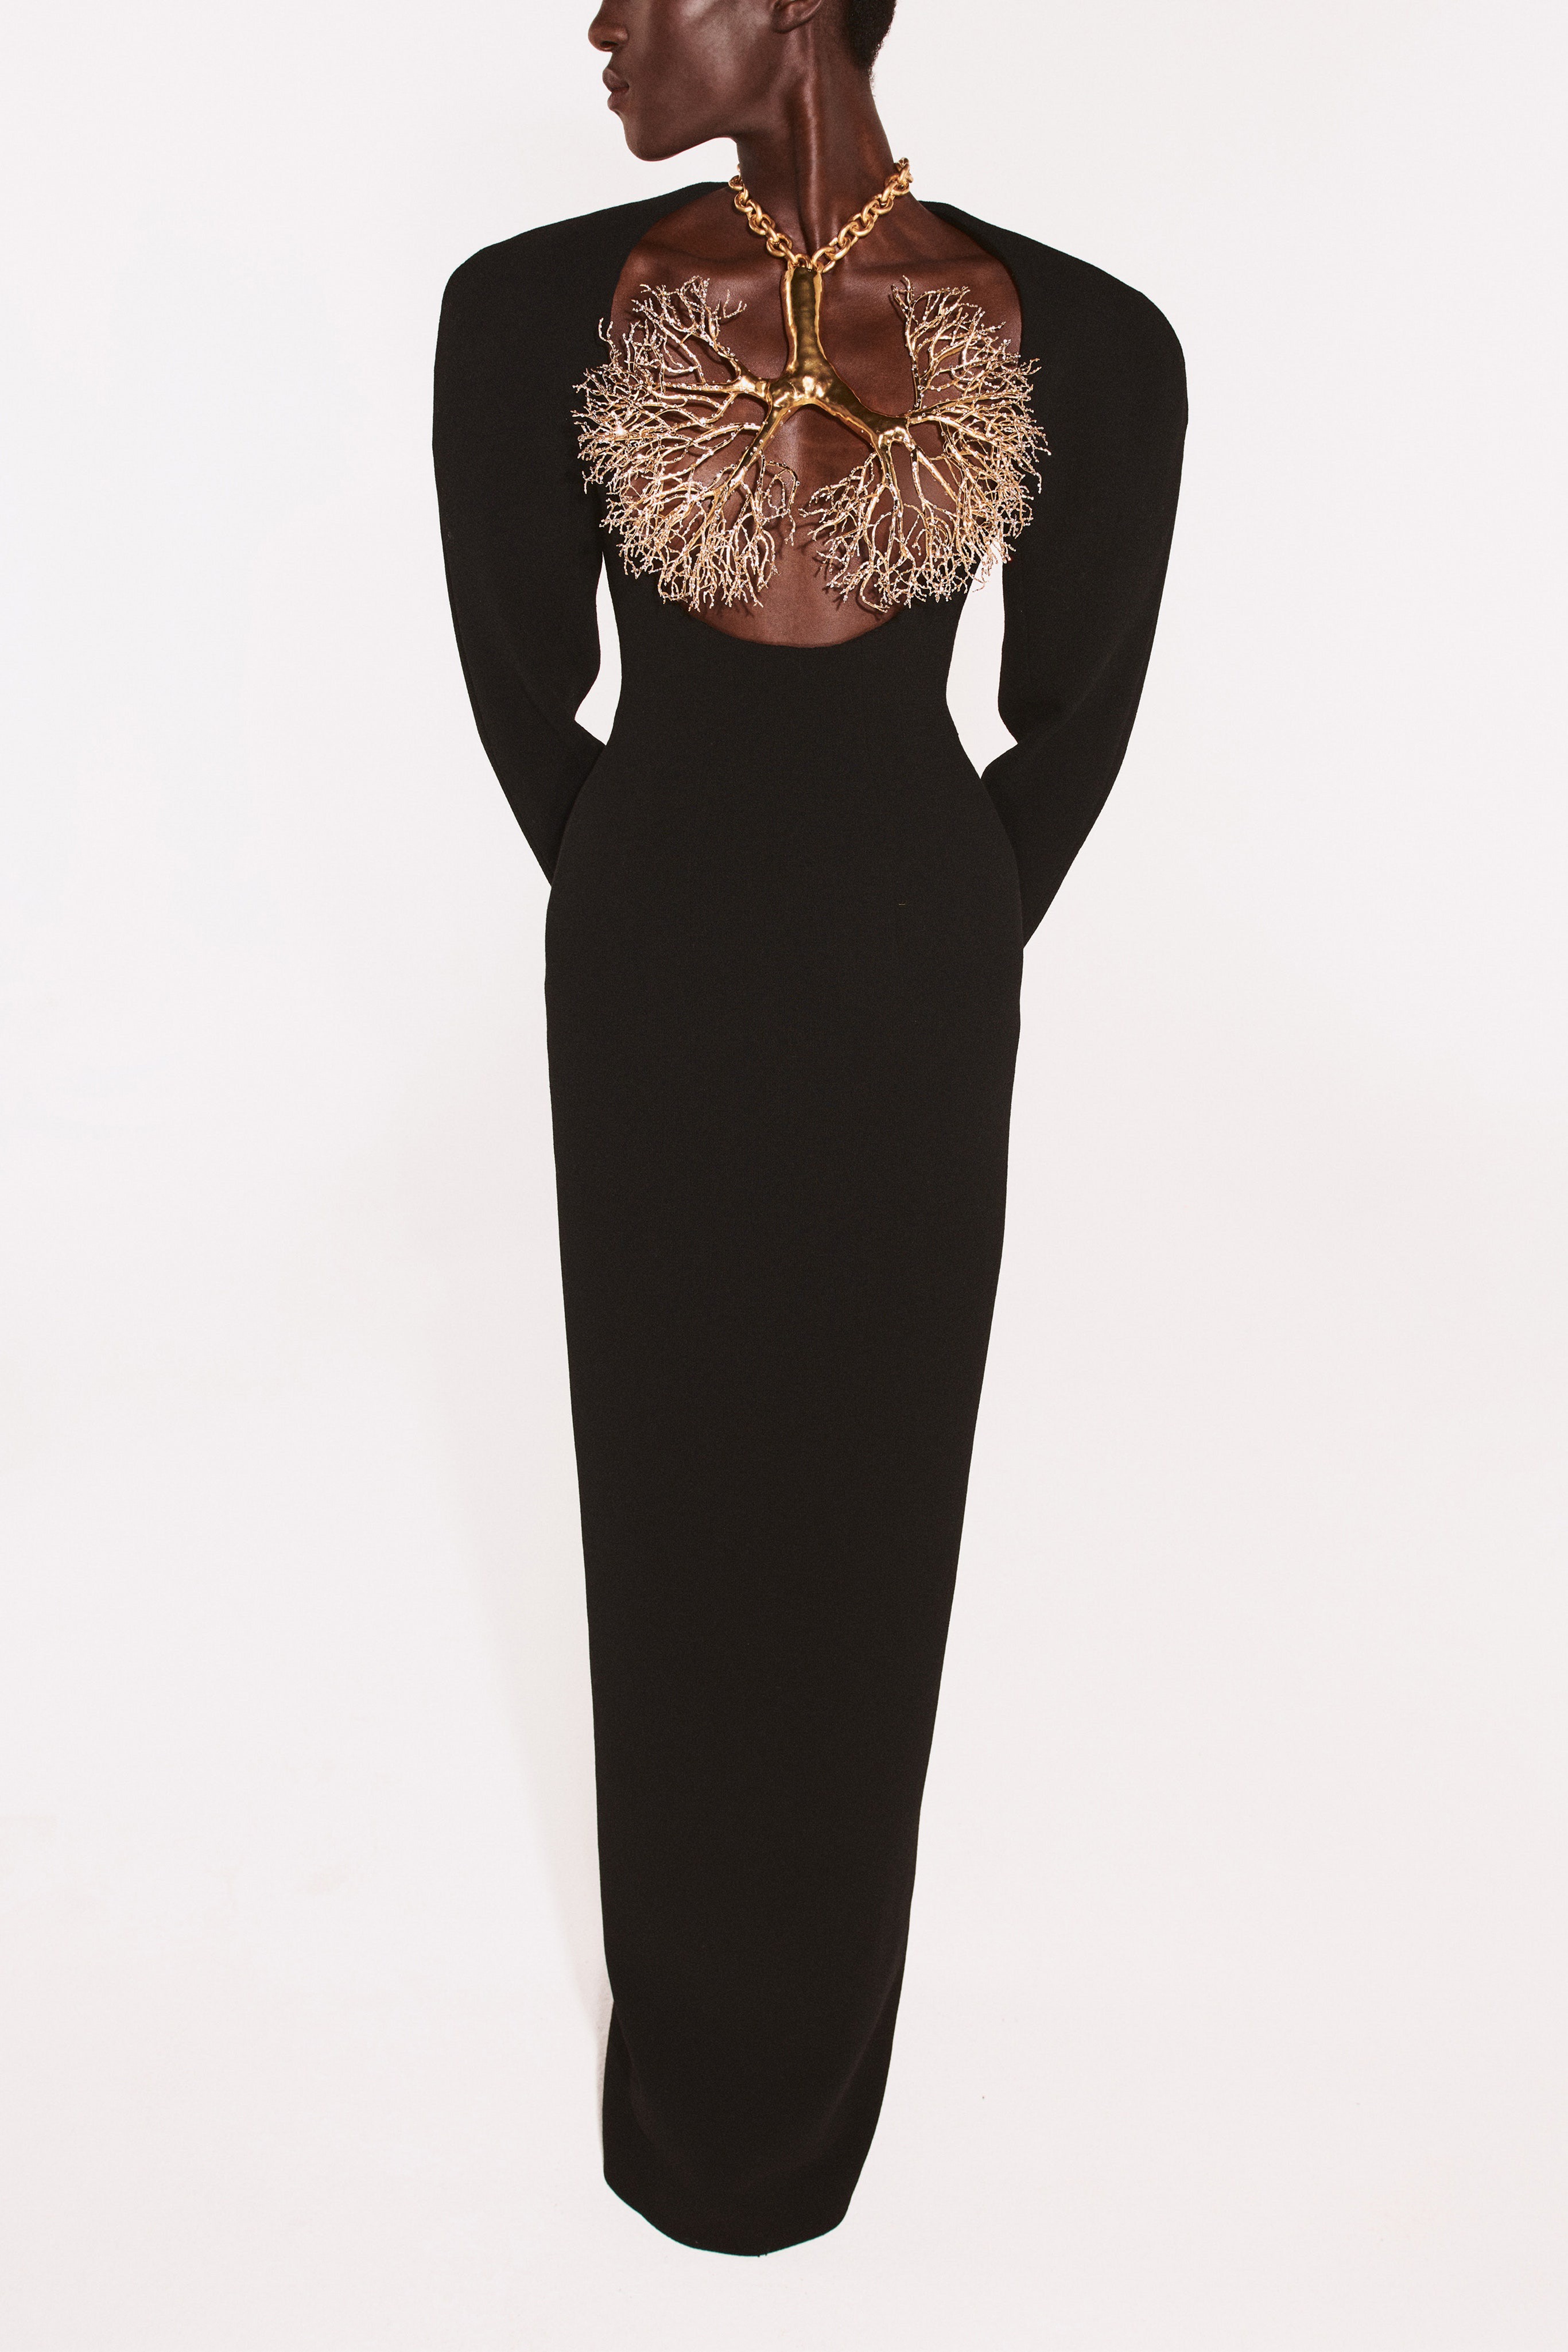 Schiaparelli Fall 2021' Couture.